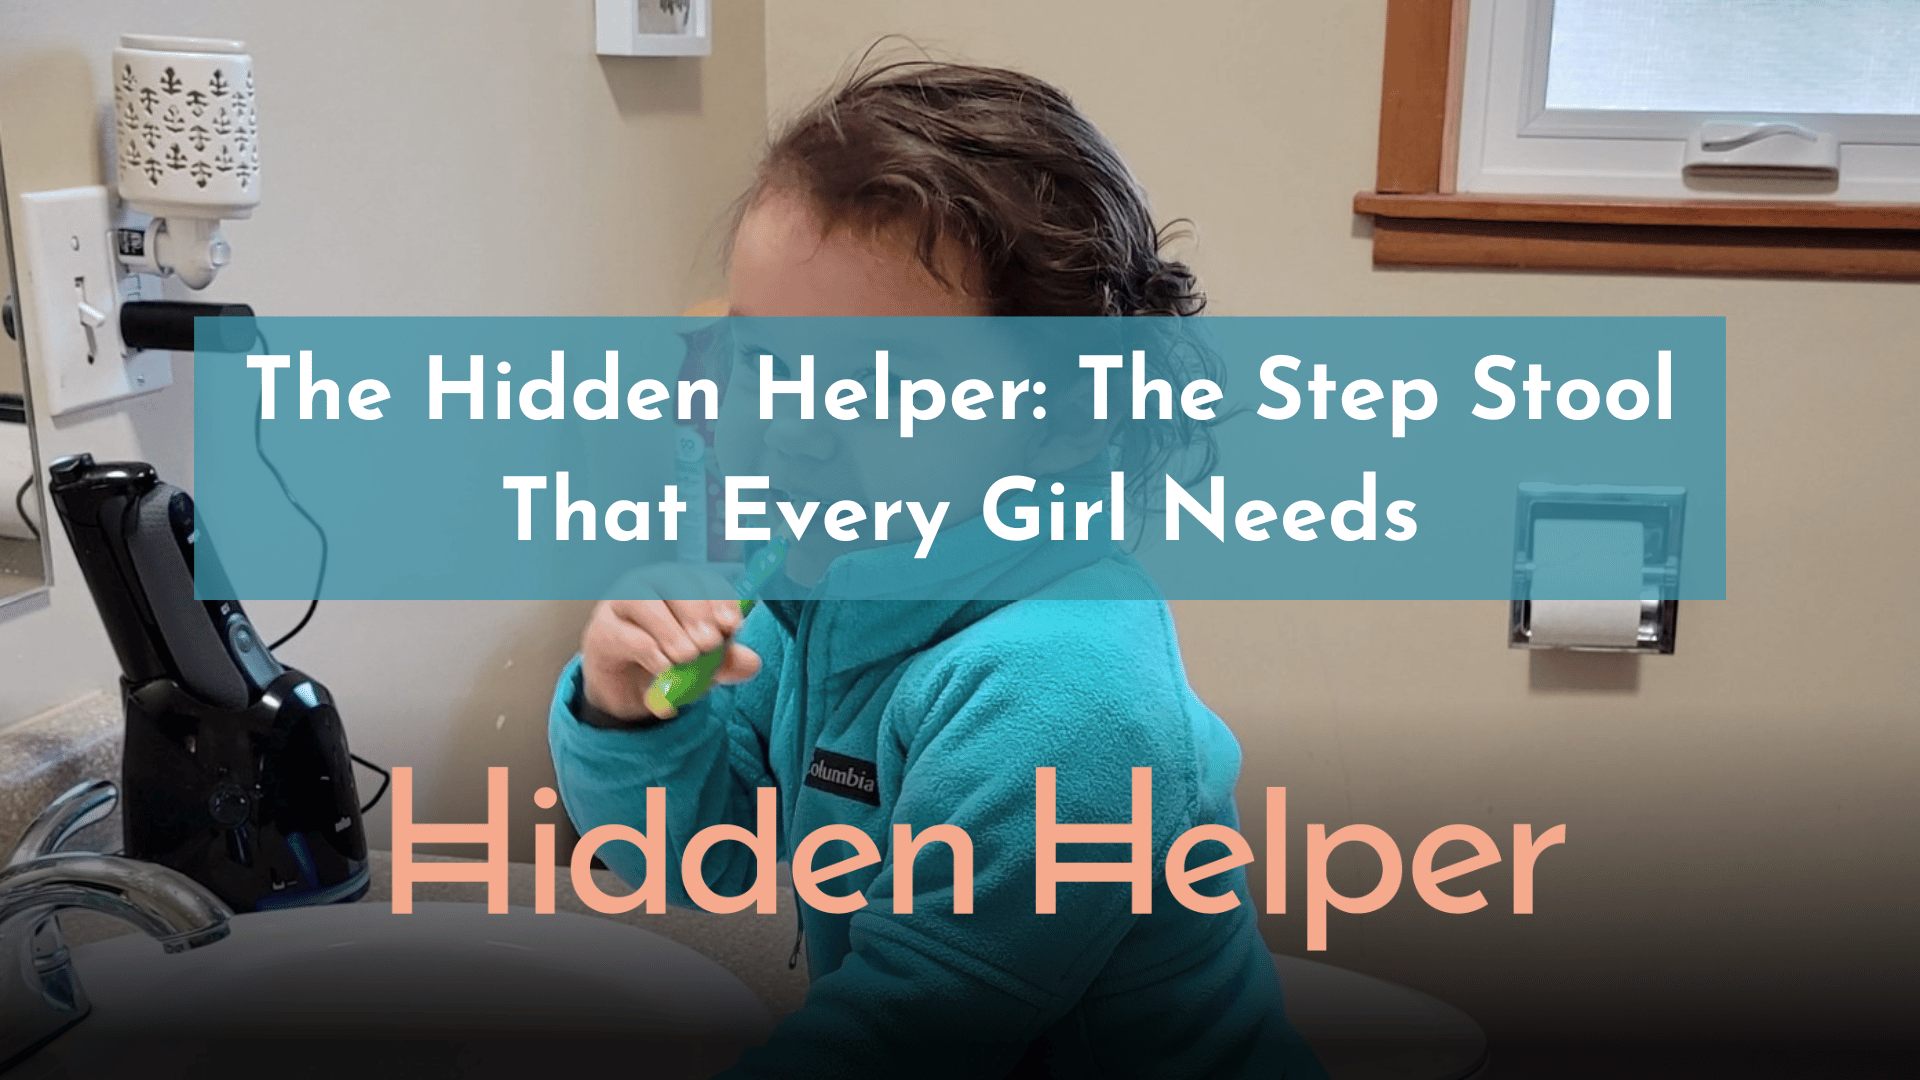 The Hidden Helper: The Step Stool That Every Girl Needs